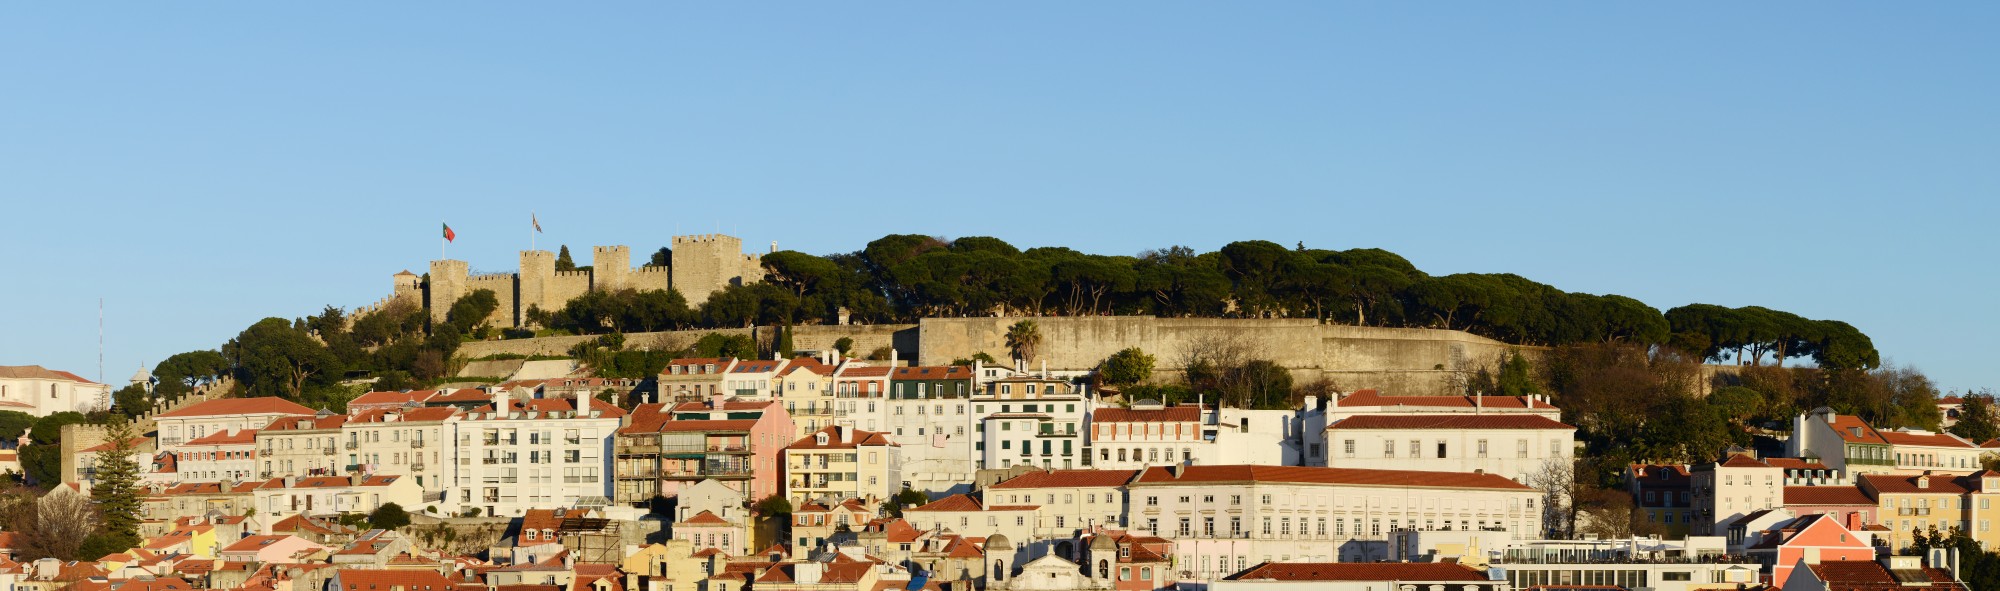 Lisboa January 2015-20a